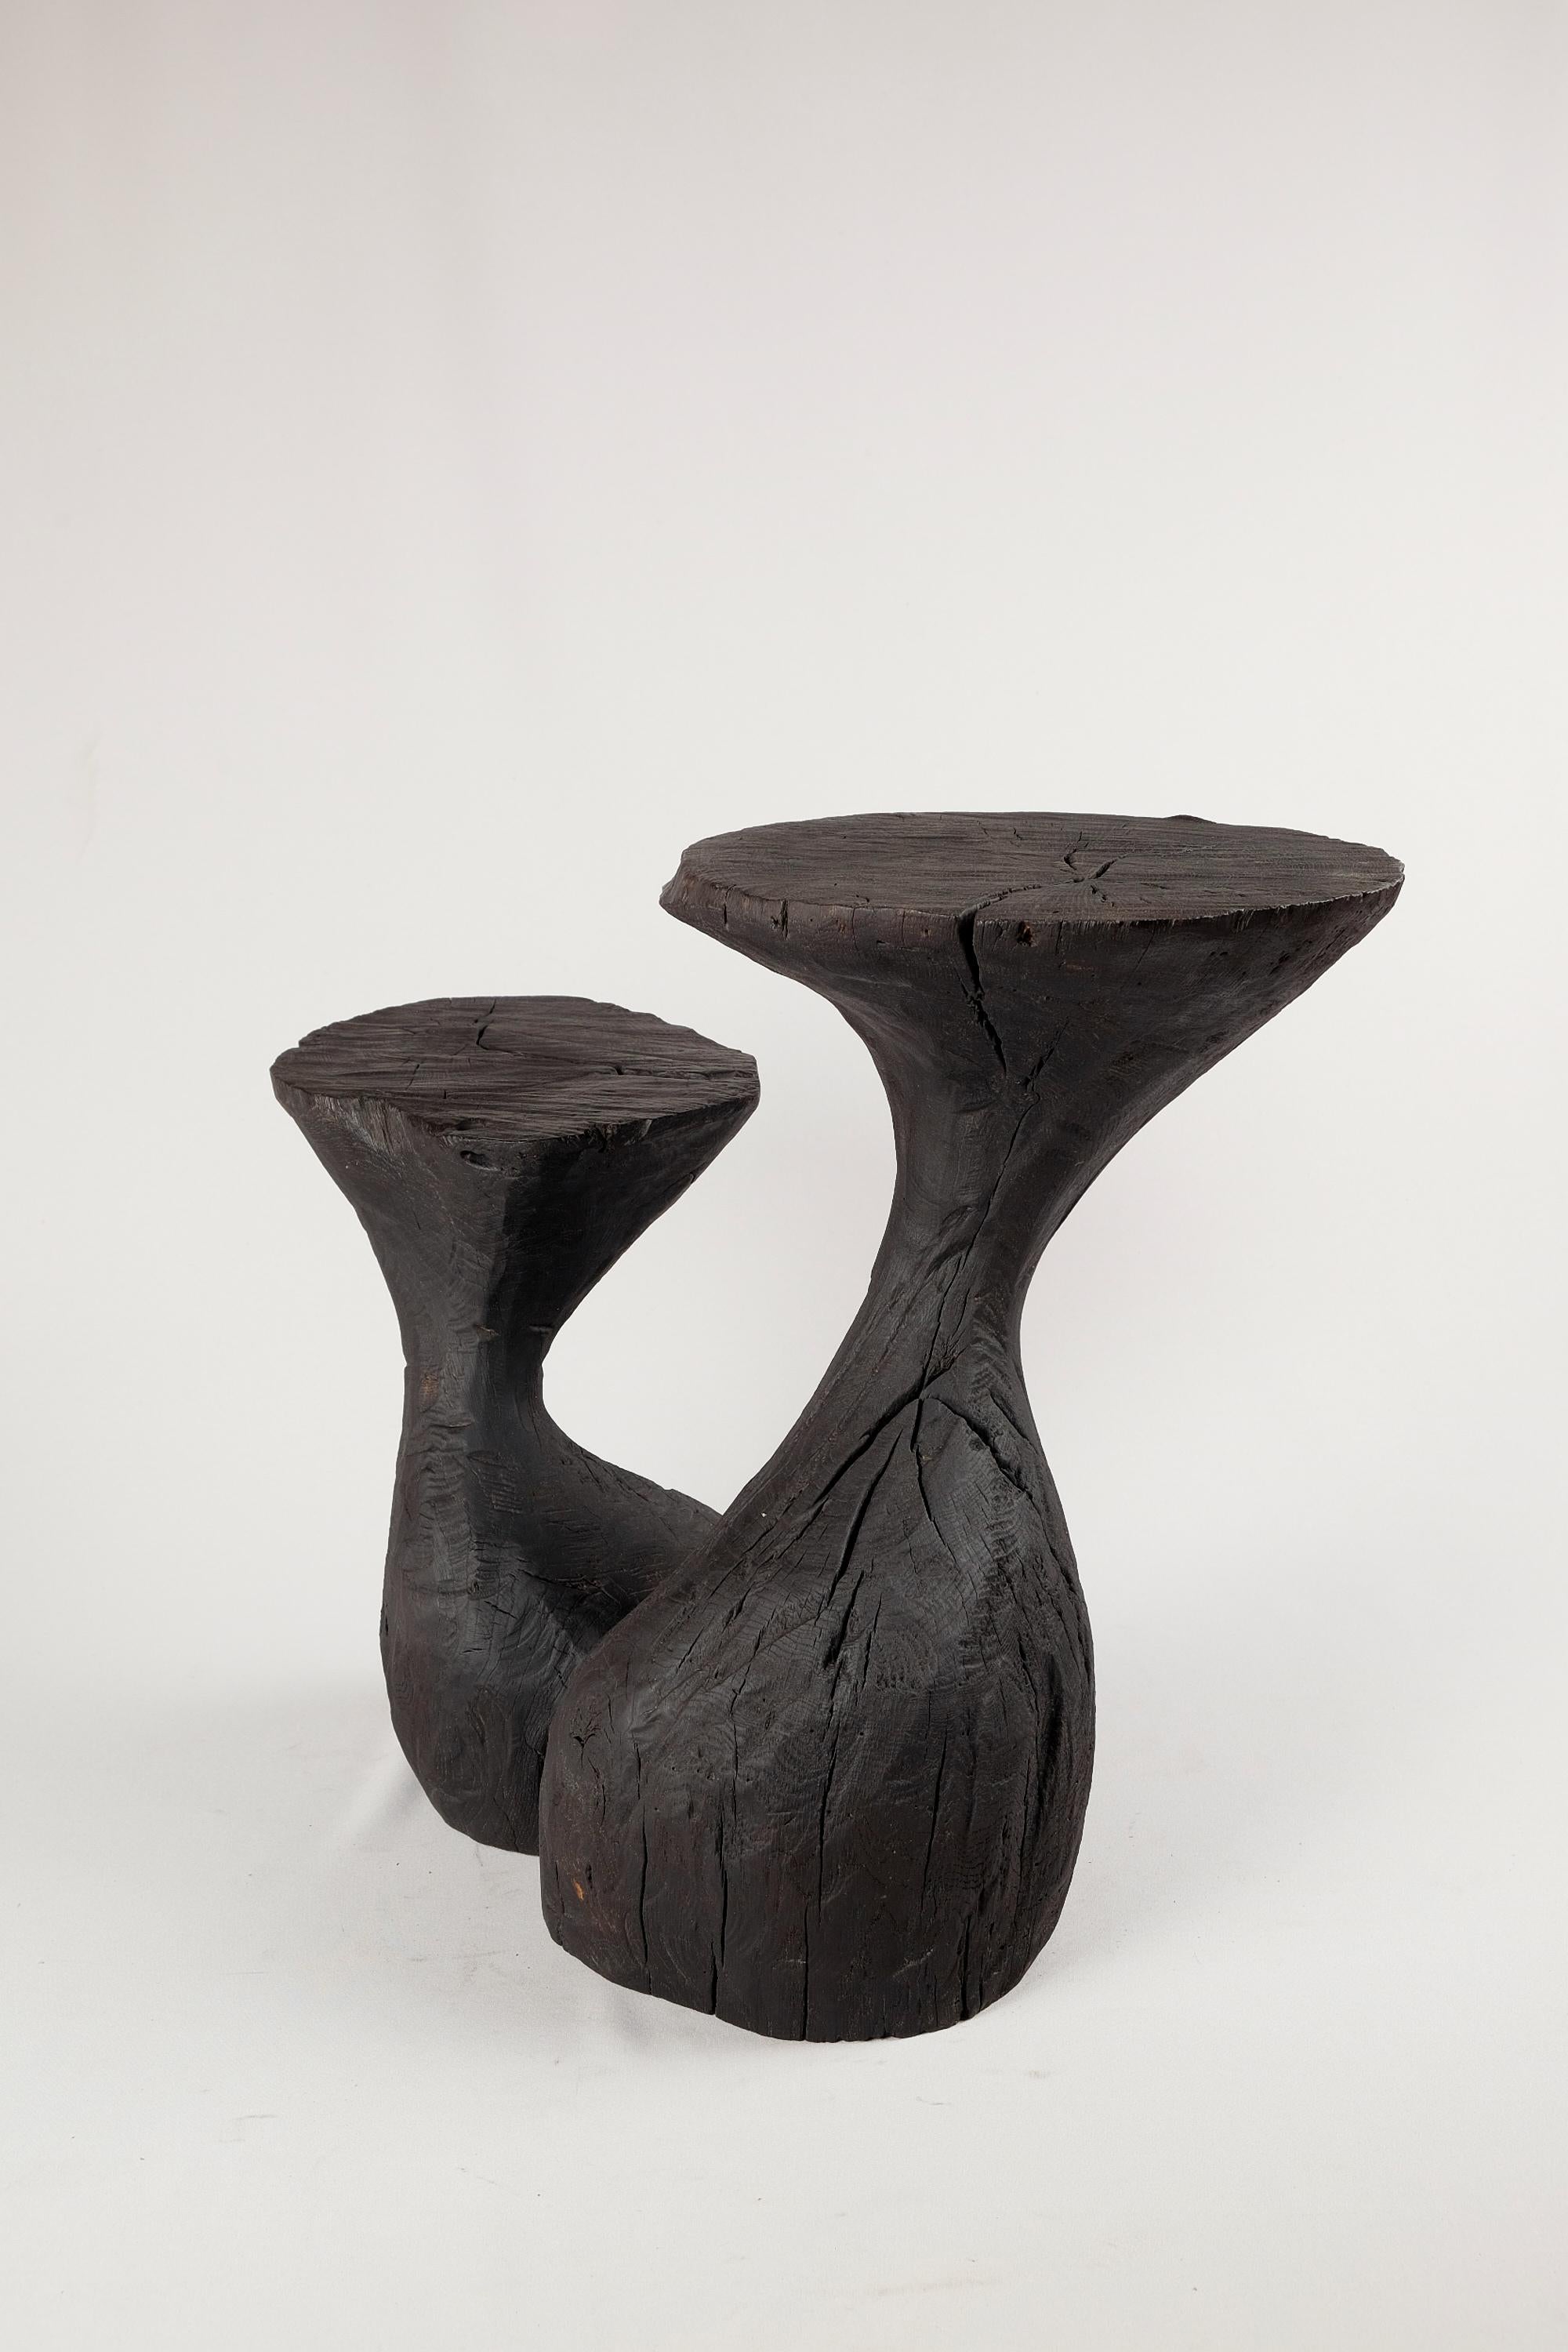 Carved Solid Burnt Wood, Sculptural Side Table, Original Contemporary Design, Logniture